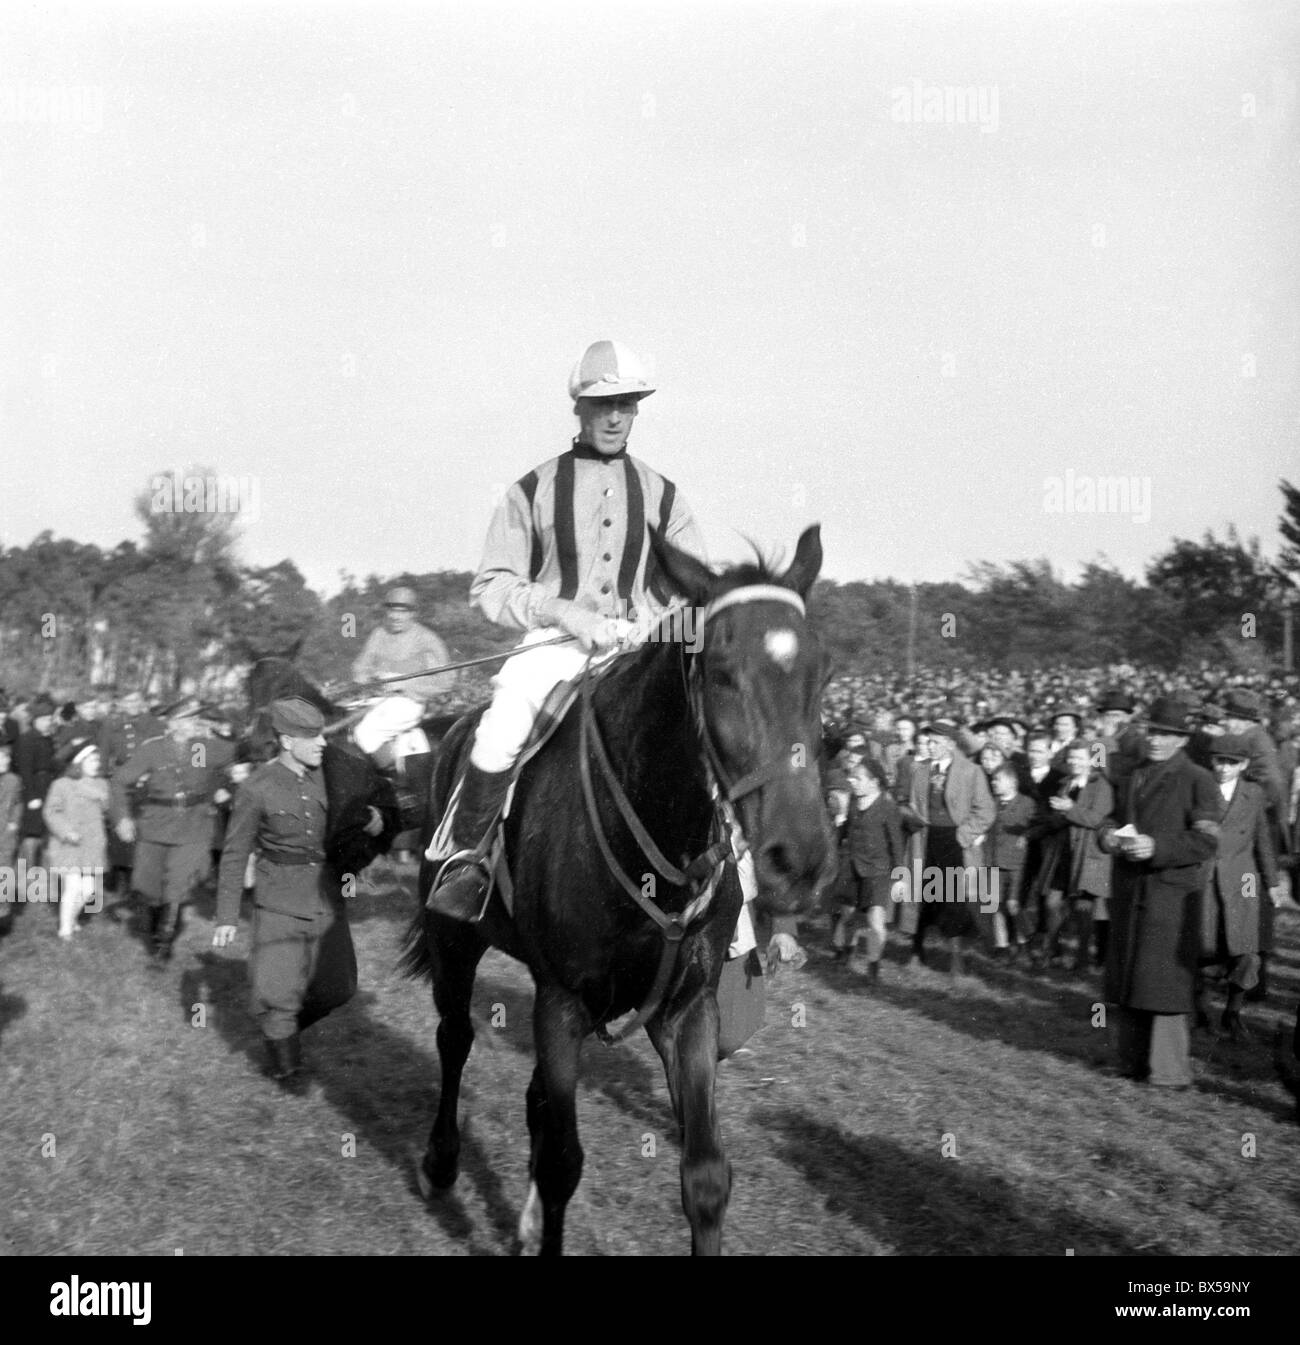 Czechoslovakia, Pardubice, horse race winner Milos Svoda on horseback. Stock Photo